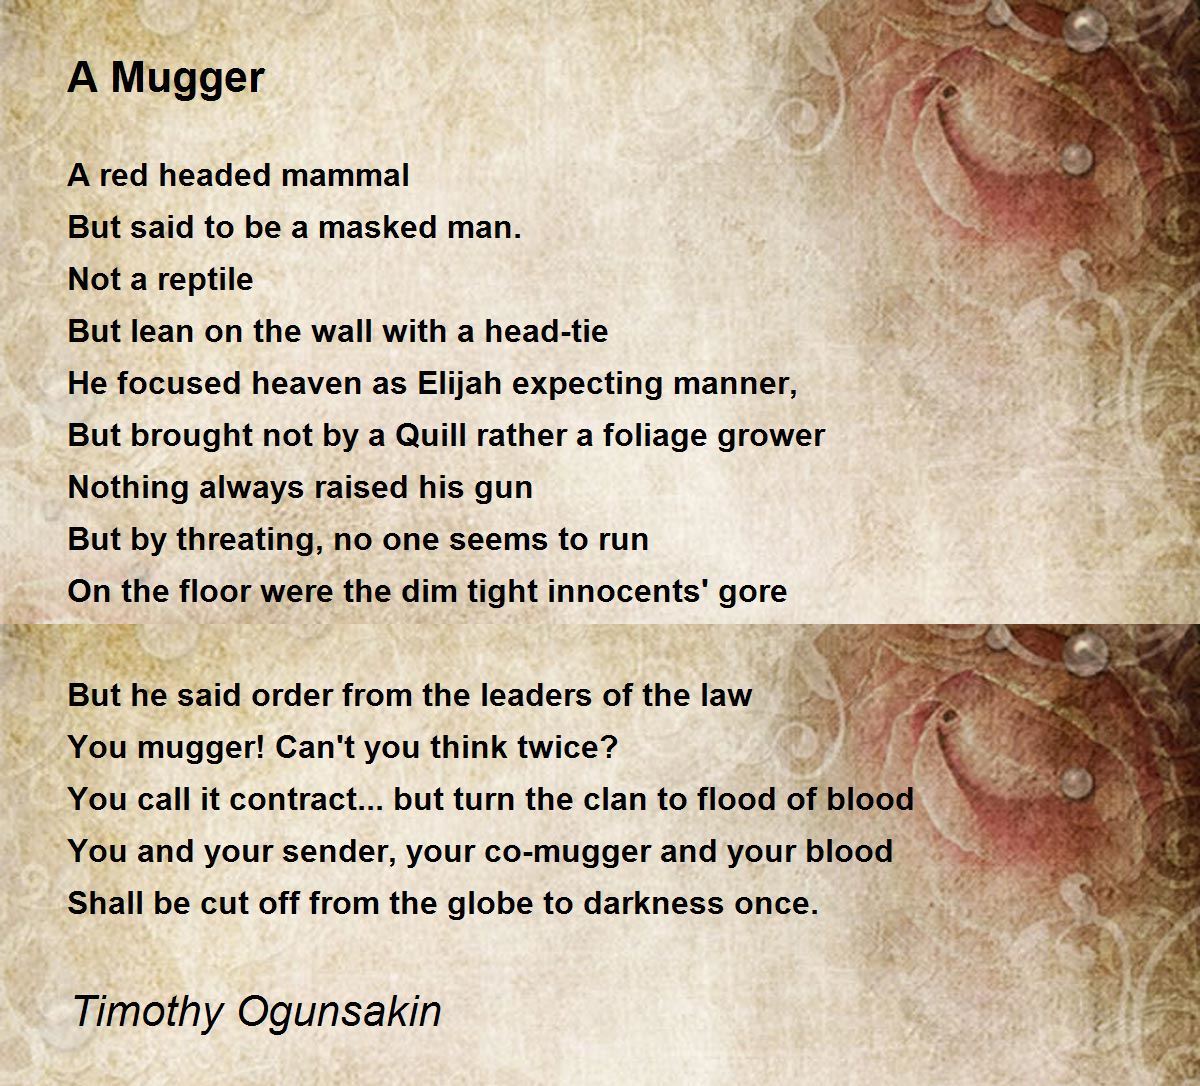 My Queen - My Queen Poem by Timothy Ogunsakin